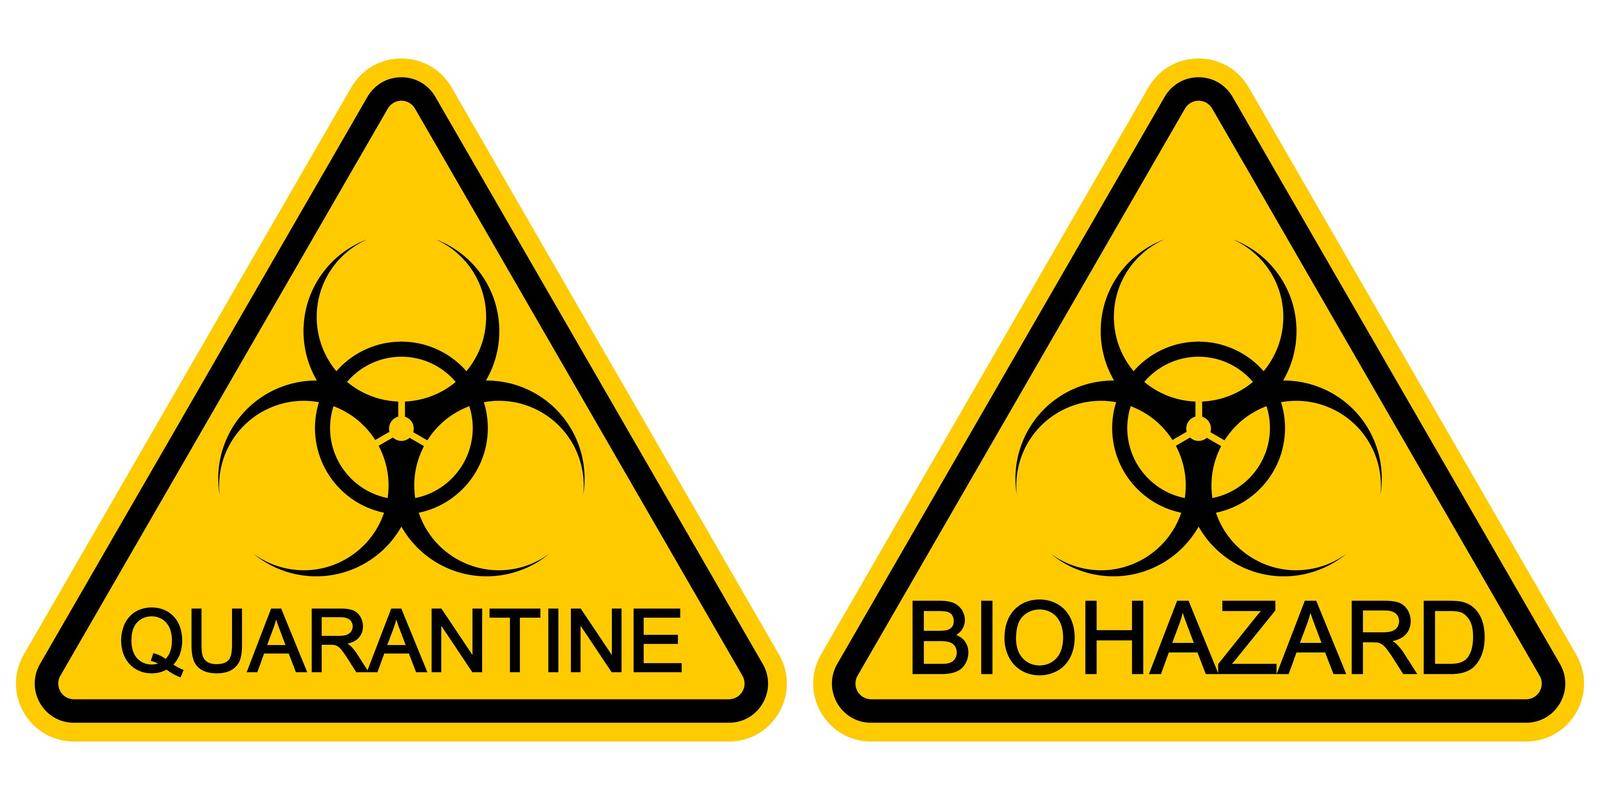 Yellow triangular sign warning of quarantine SARS COVID 19 coronavirus, vector danger biohazard pneumonia protection symbol